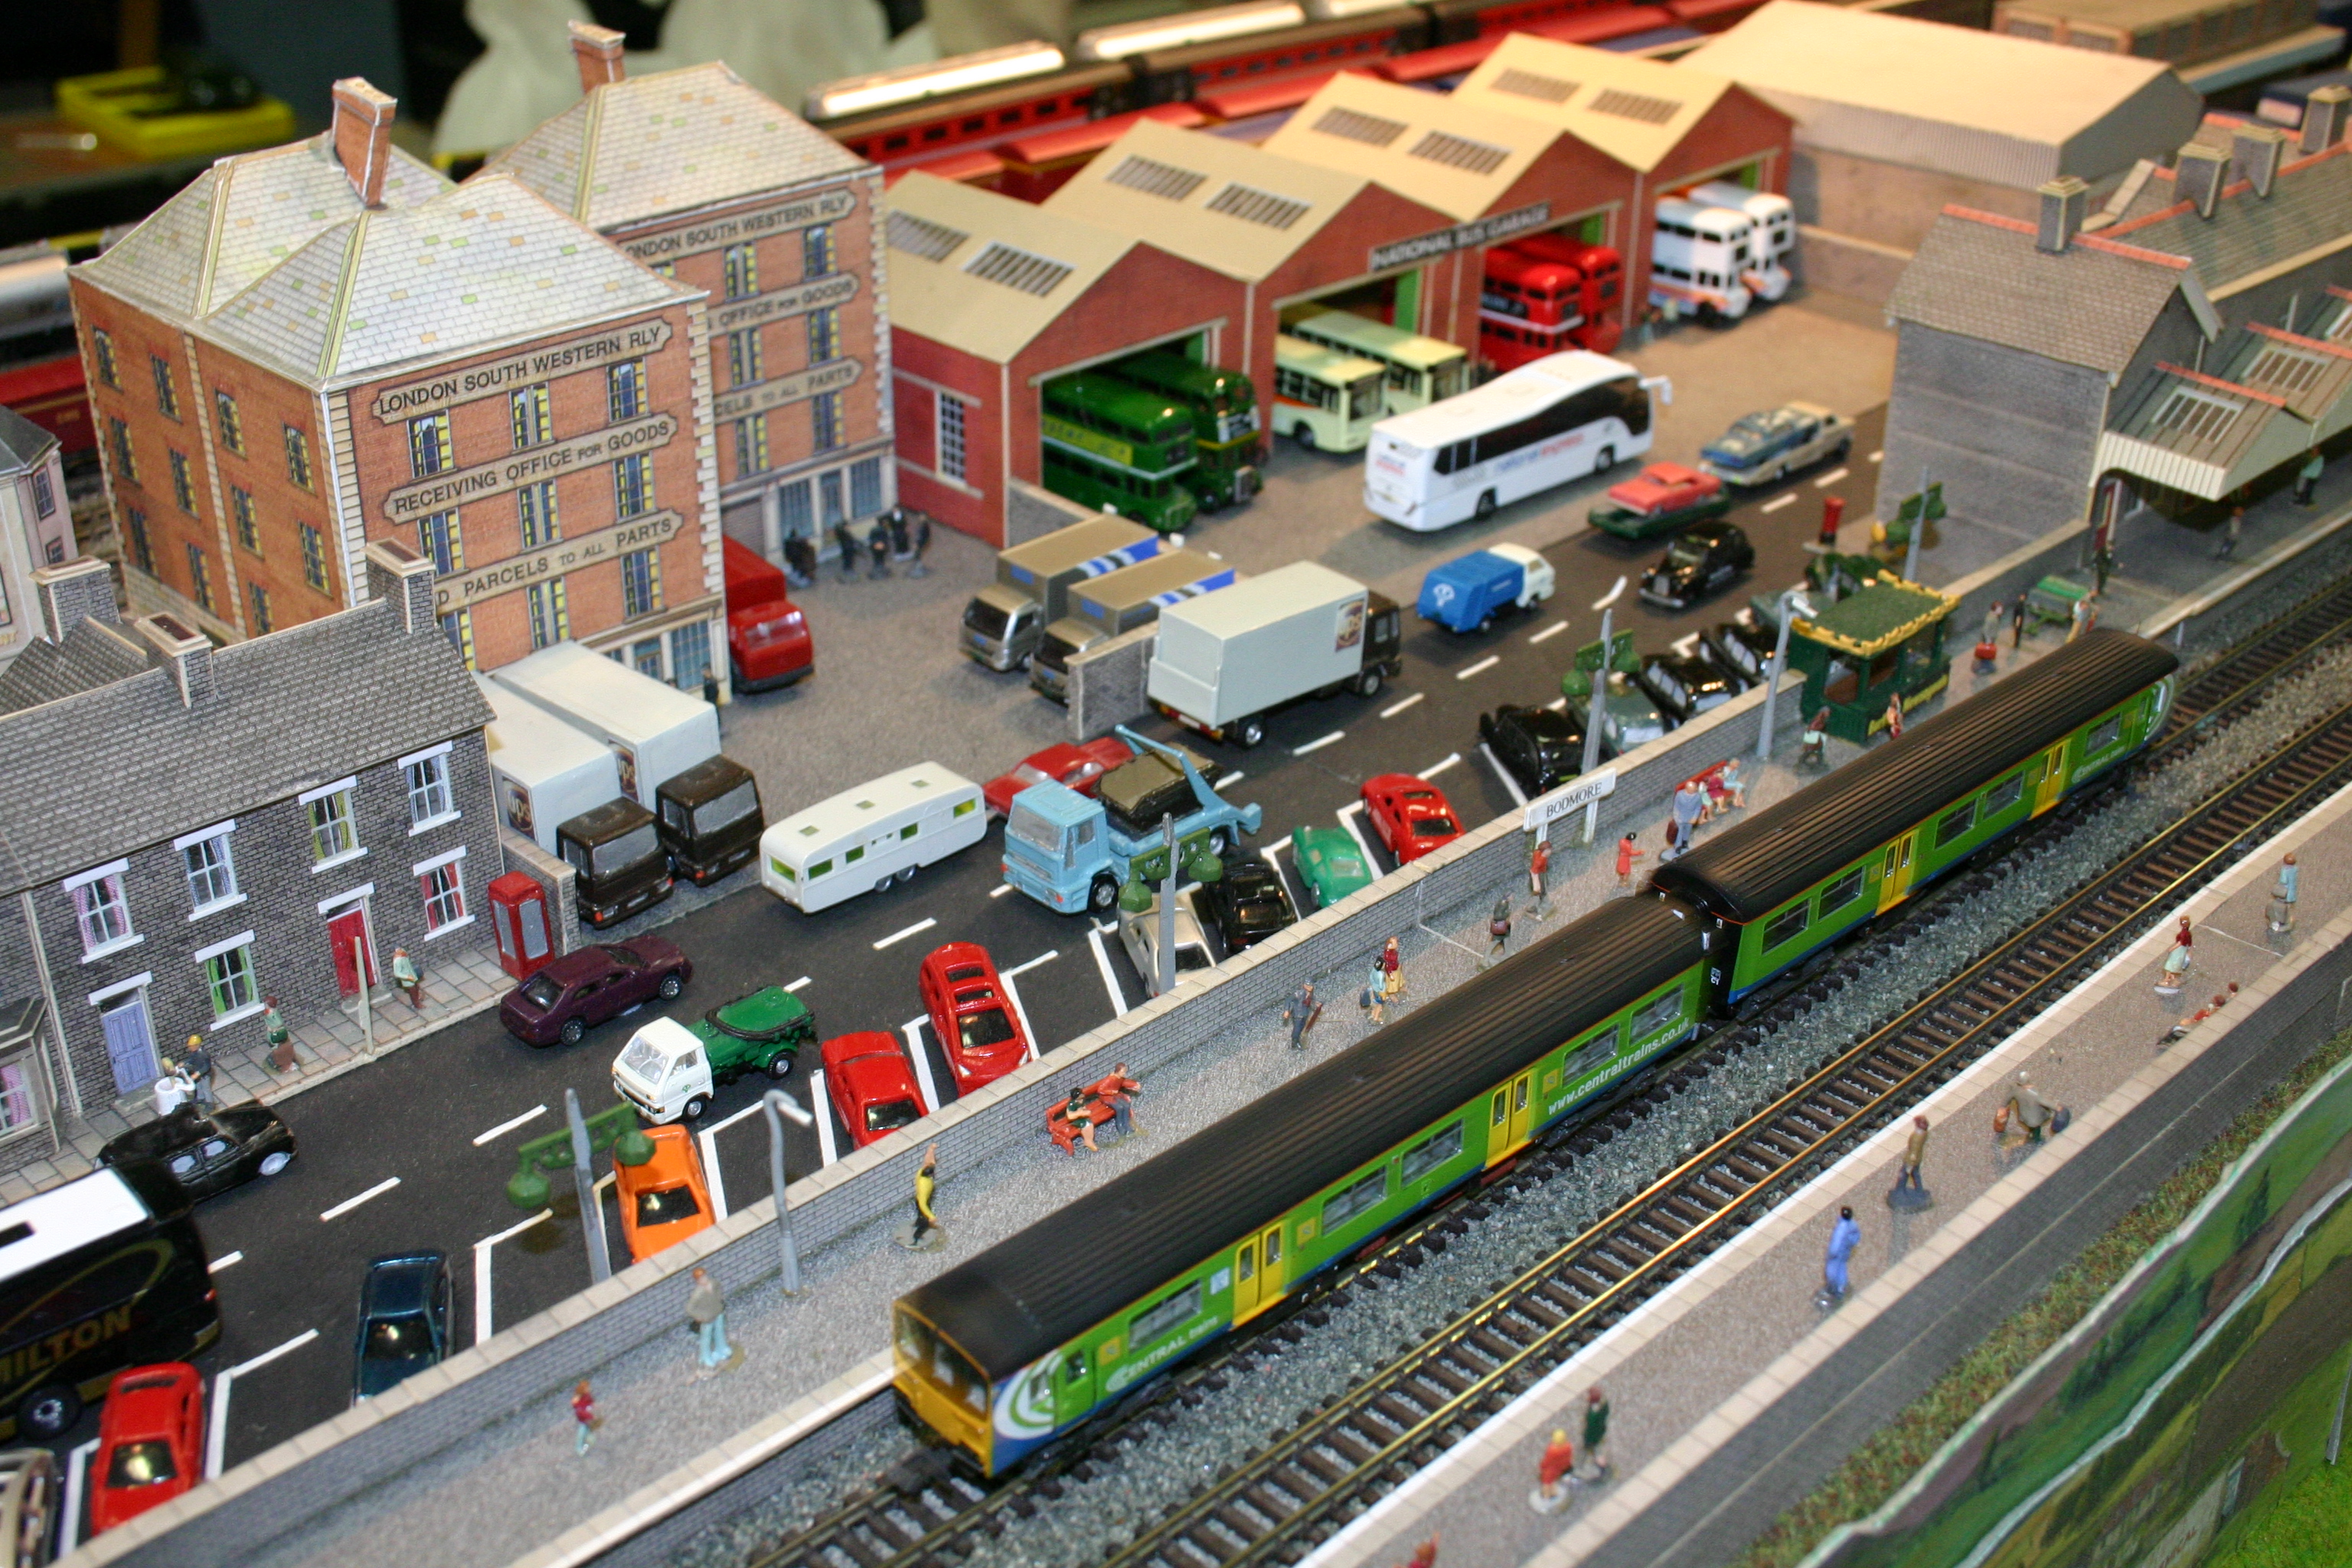  Model Railway Group International Exhibition of Model Railways 2013